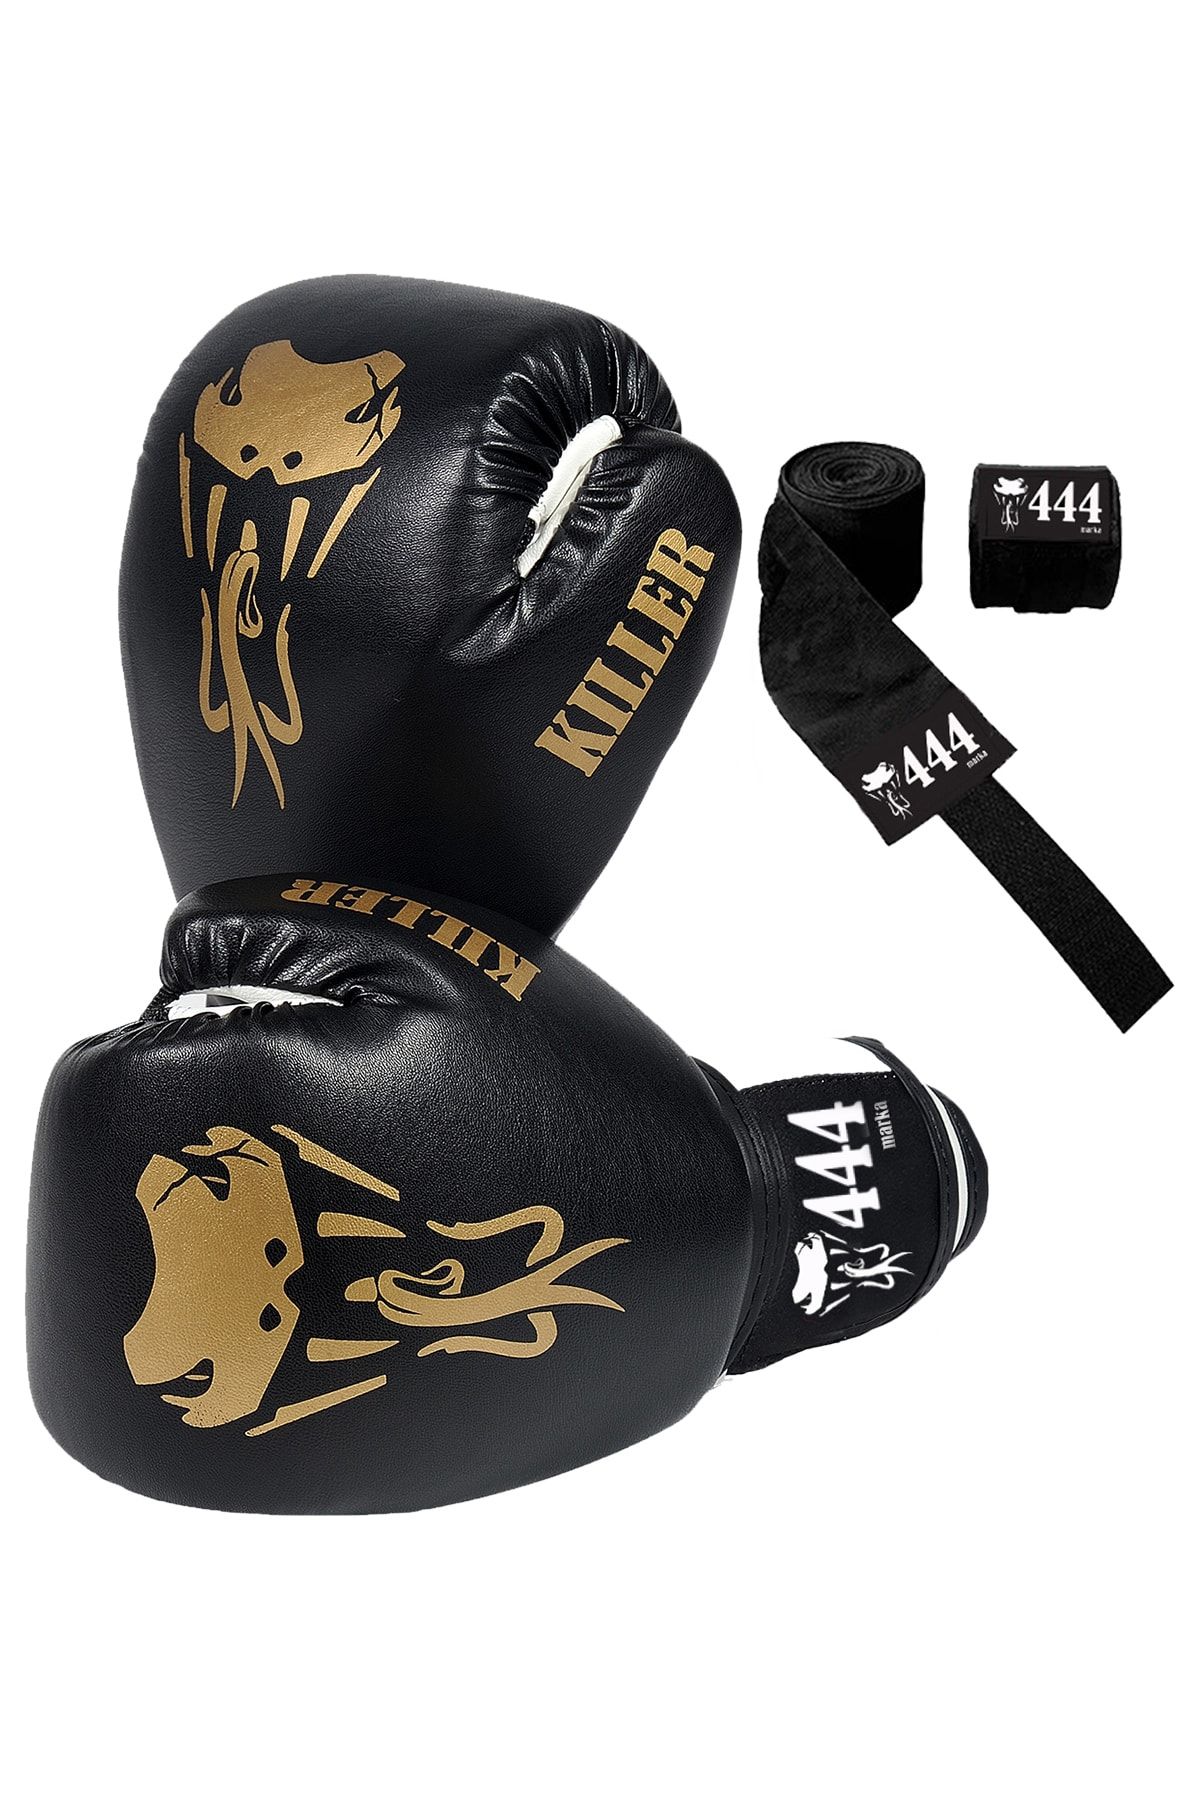 GAZELMANYA Kıller Boks Eldiveni Ve Bandaj Seti Boxing Gloves + Boks Bandajı Kick Boks Eldiveni Muay Thai